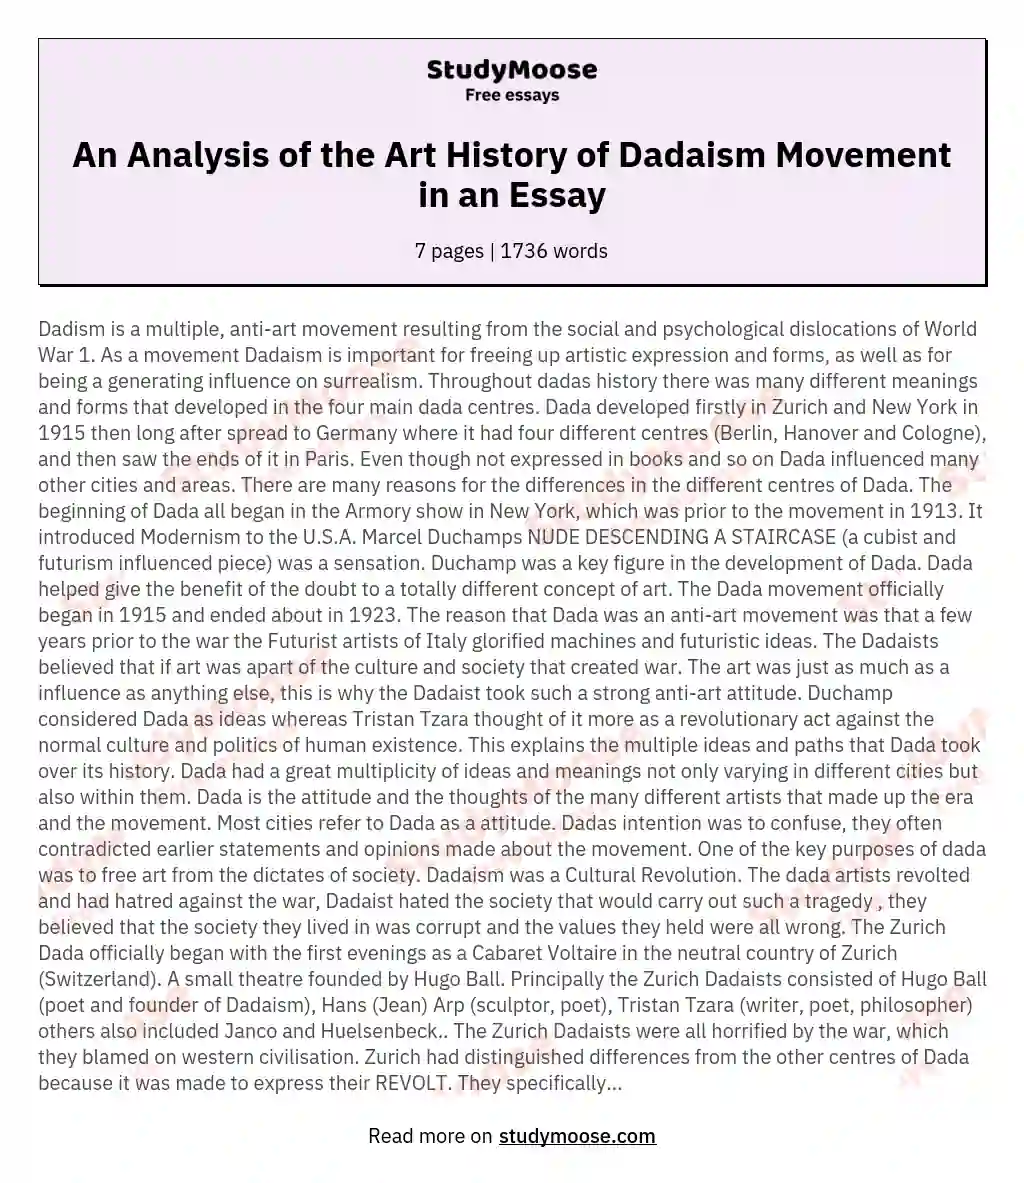 Dada Movement: From New York to Paris essay